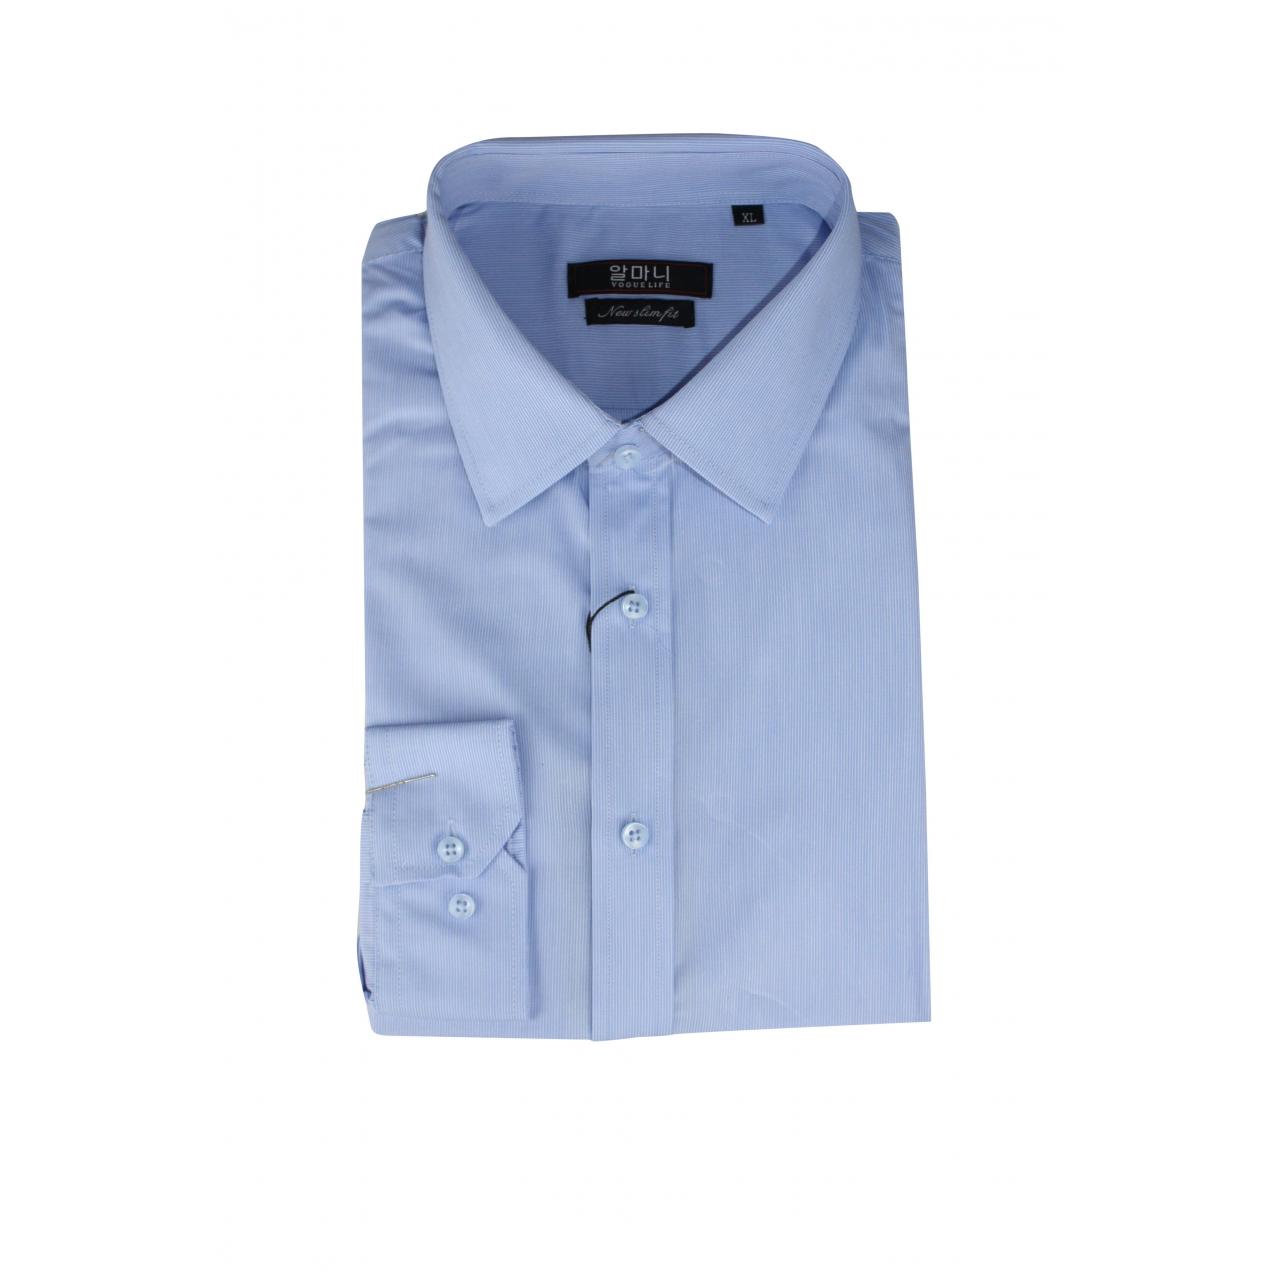 Mens White Stripes Light Blue Shirt Long Sleeve With Tie Set